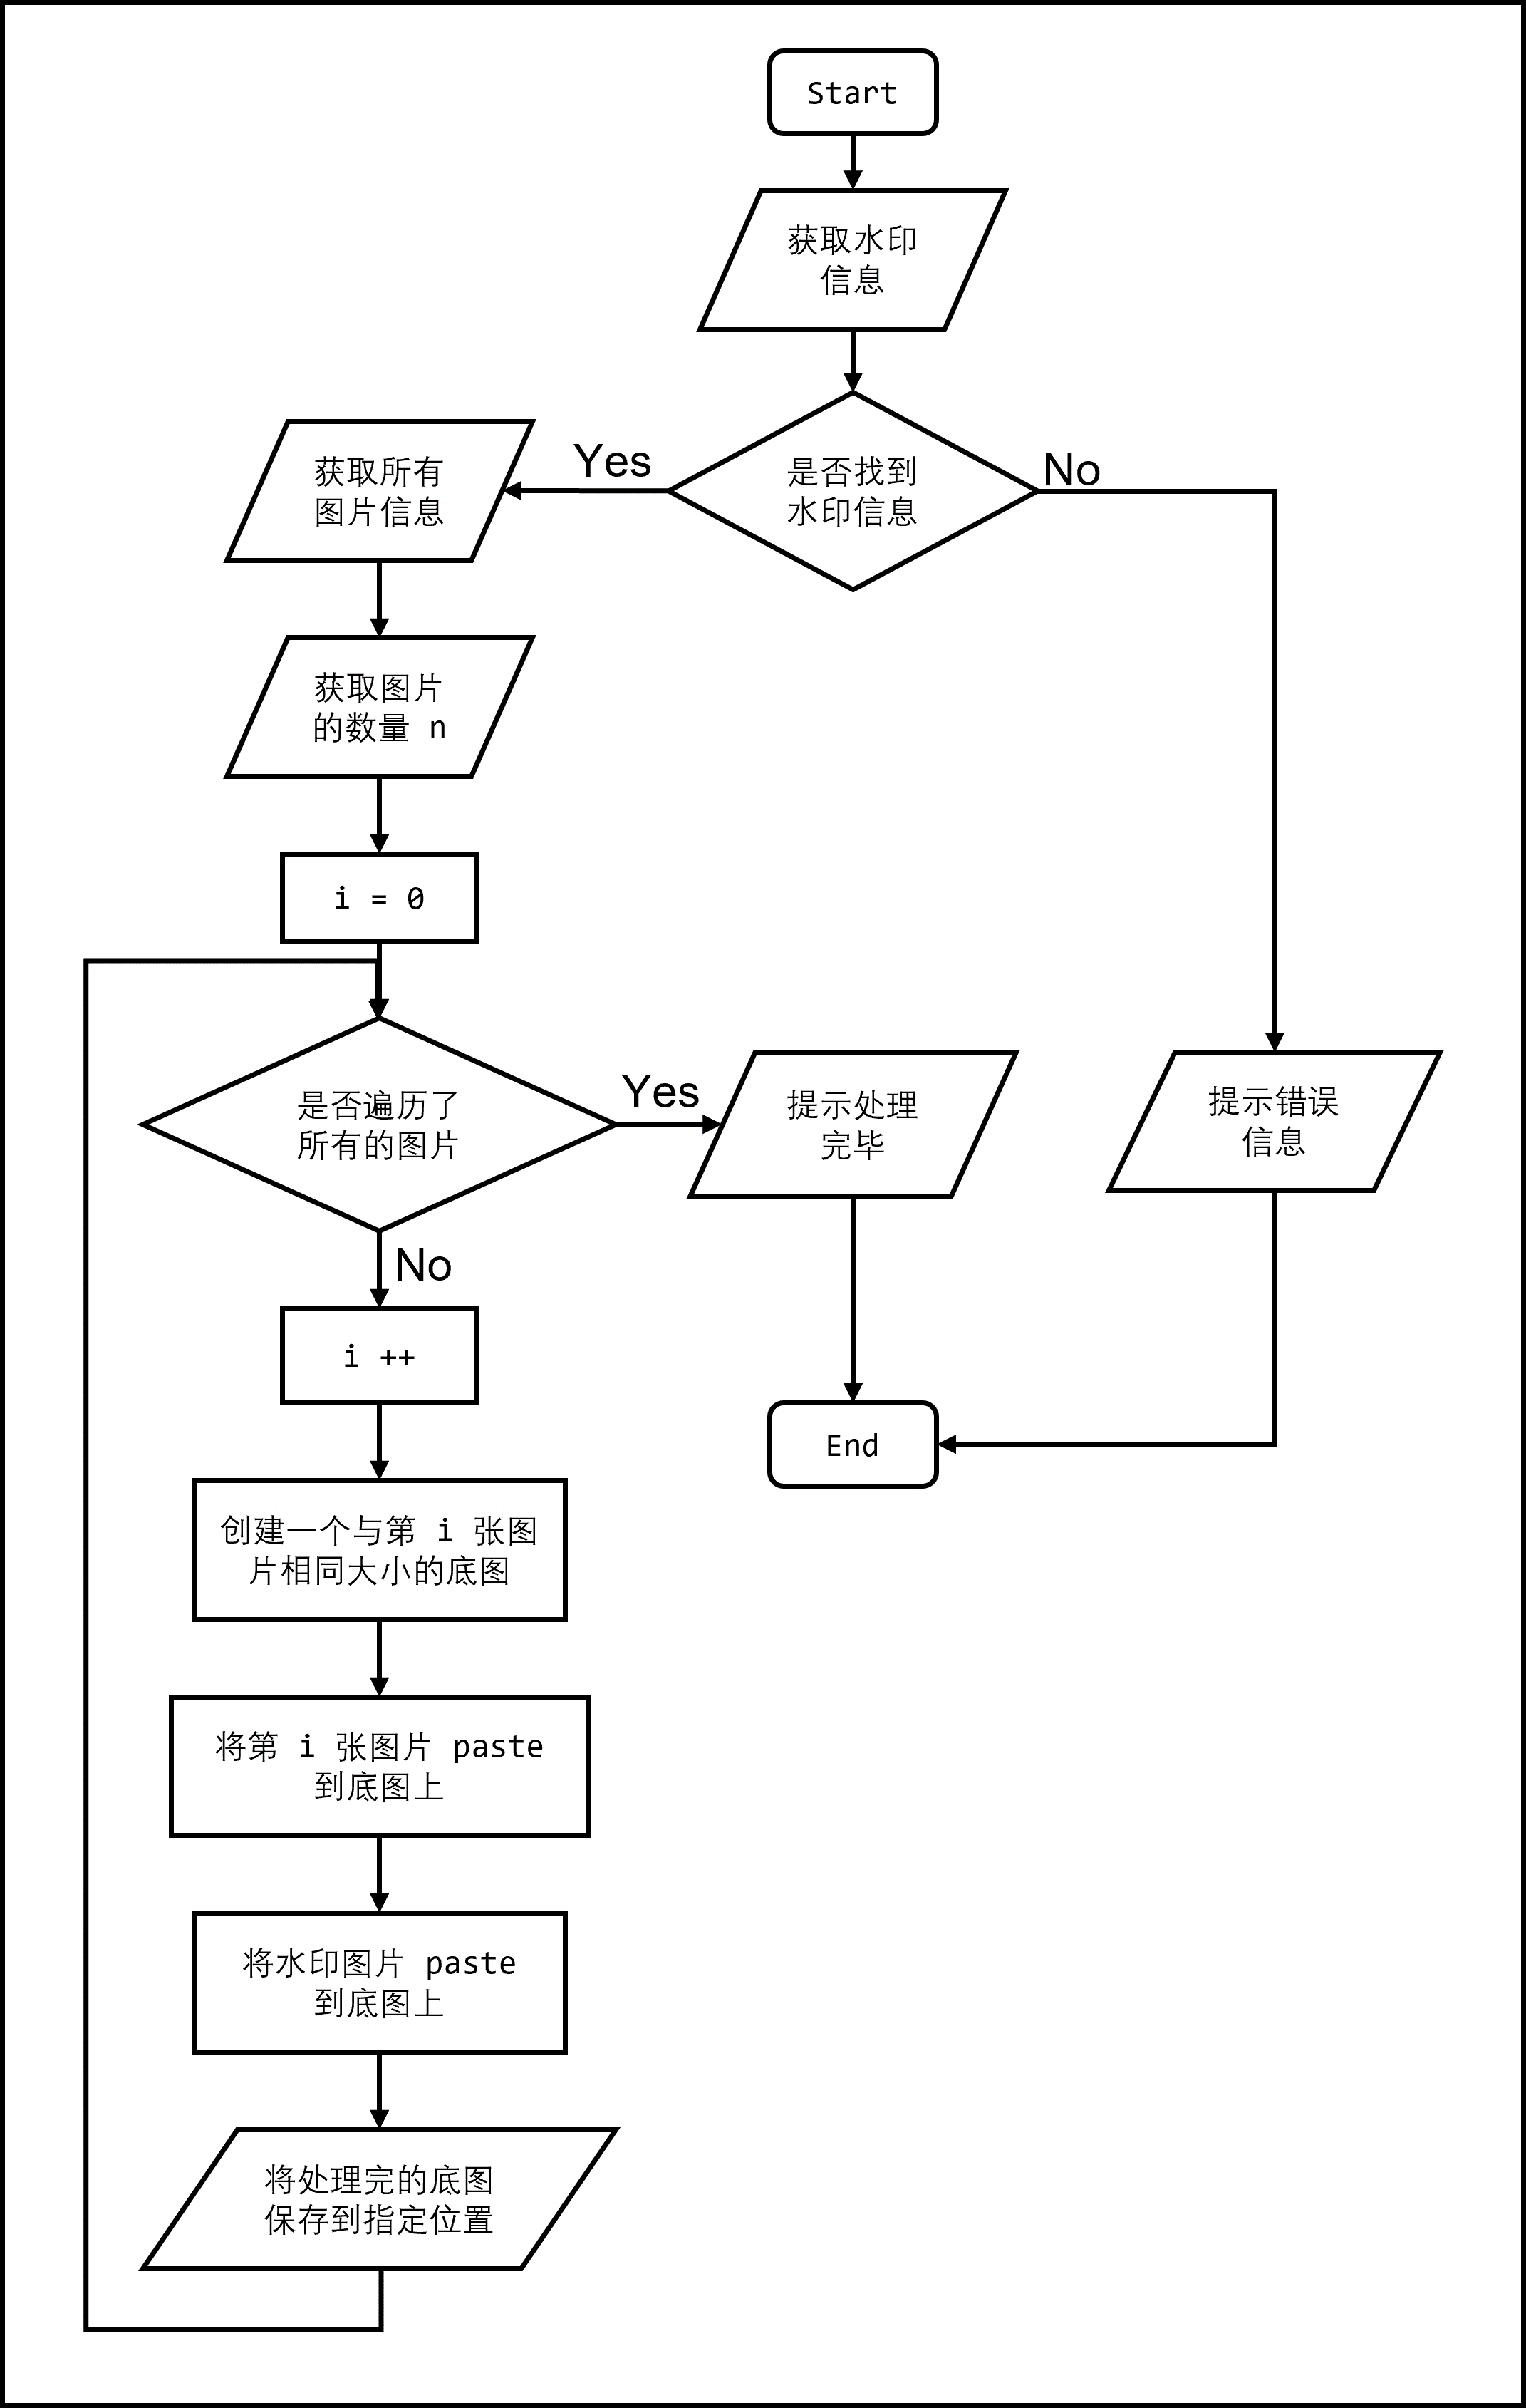 image-process-flow-chart